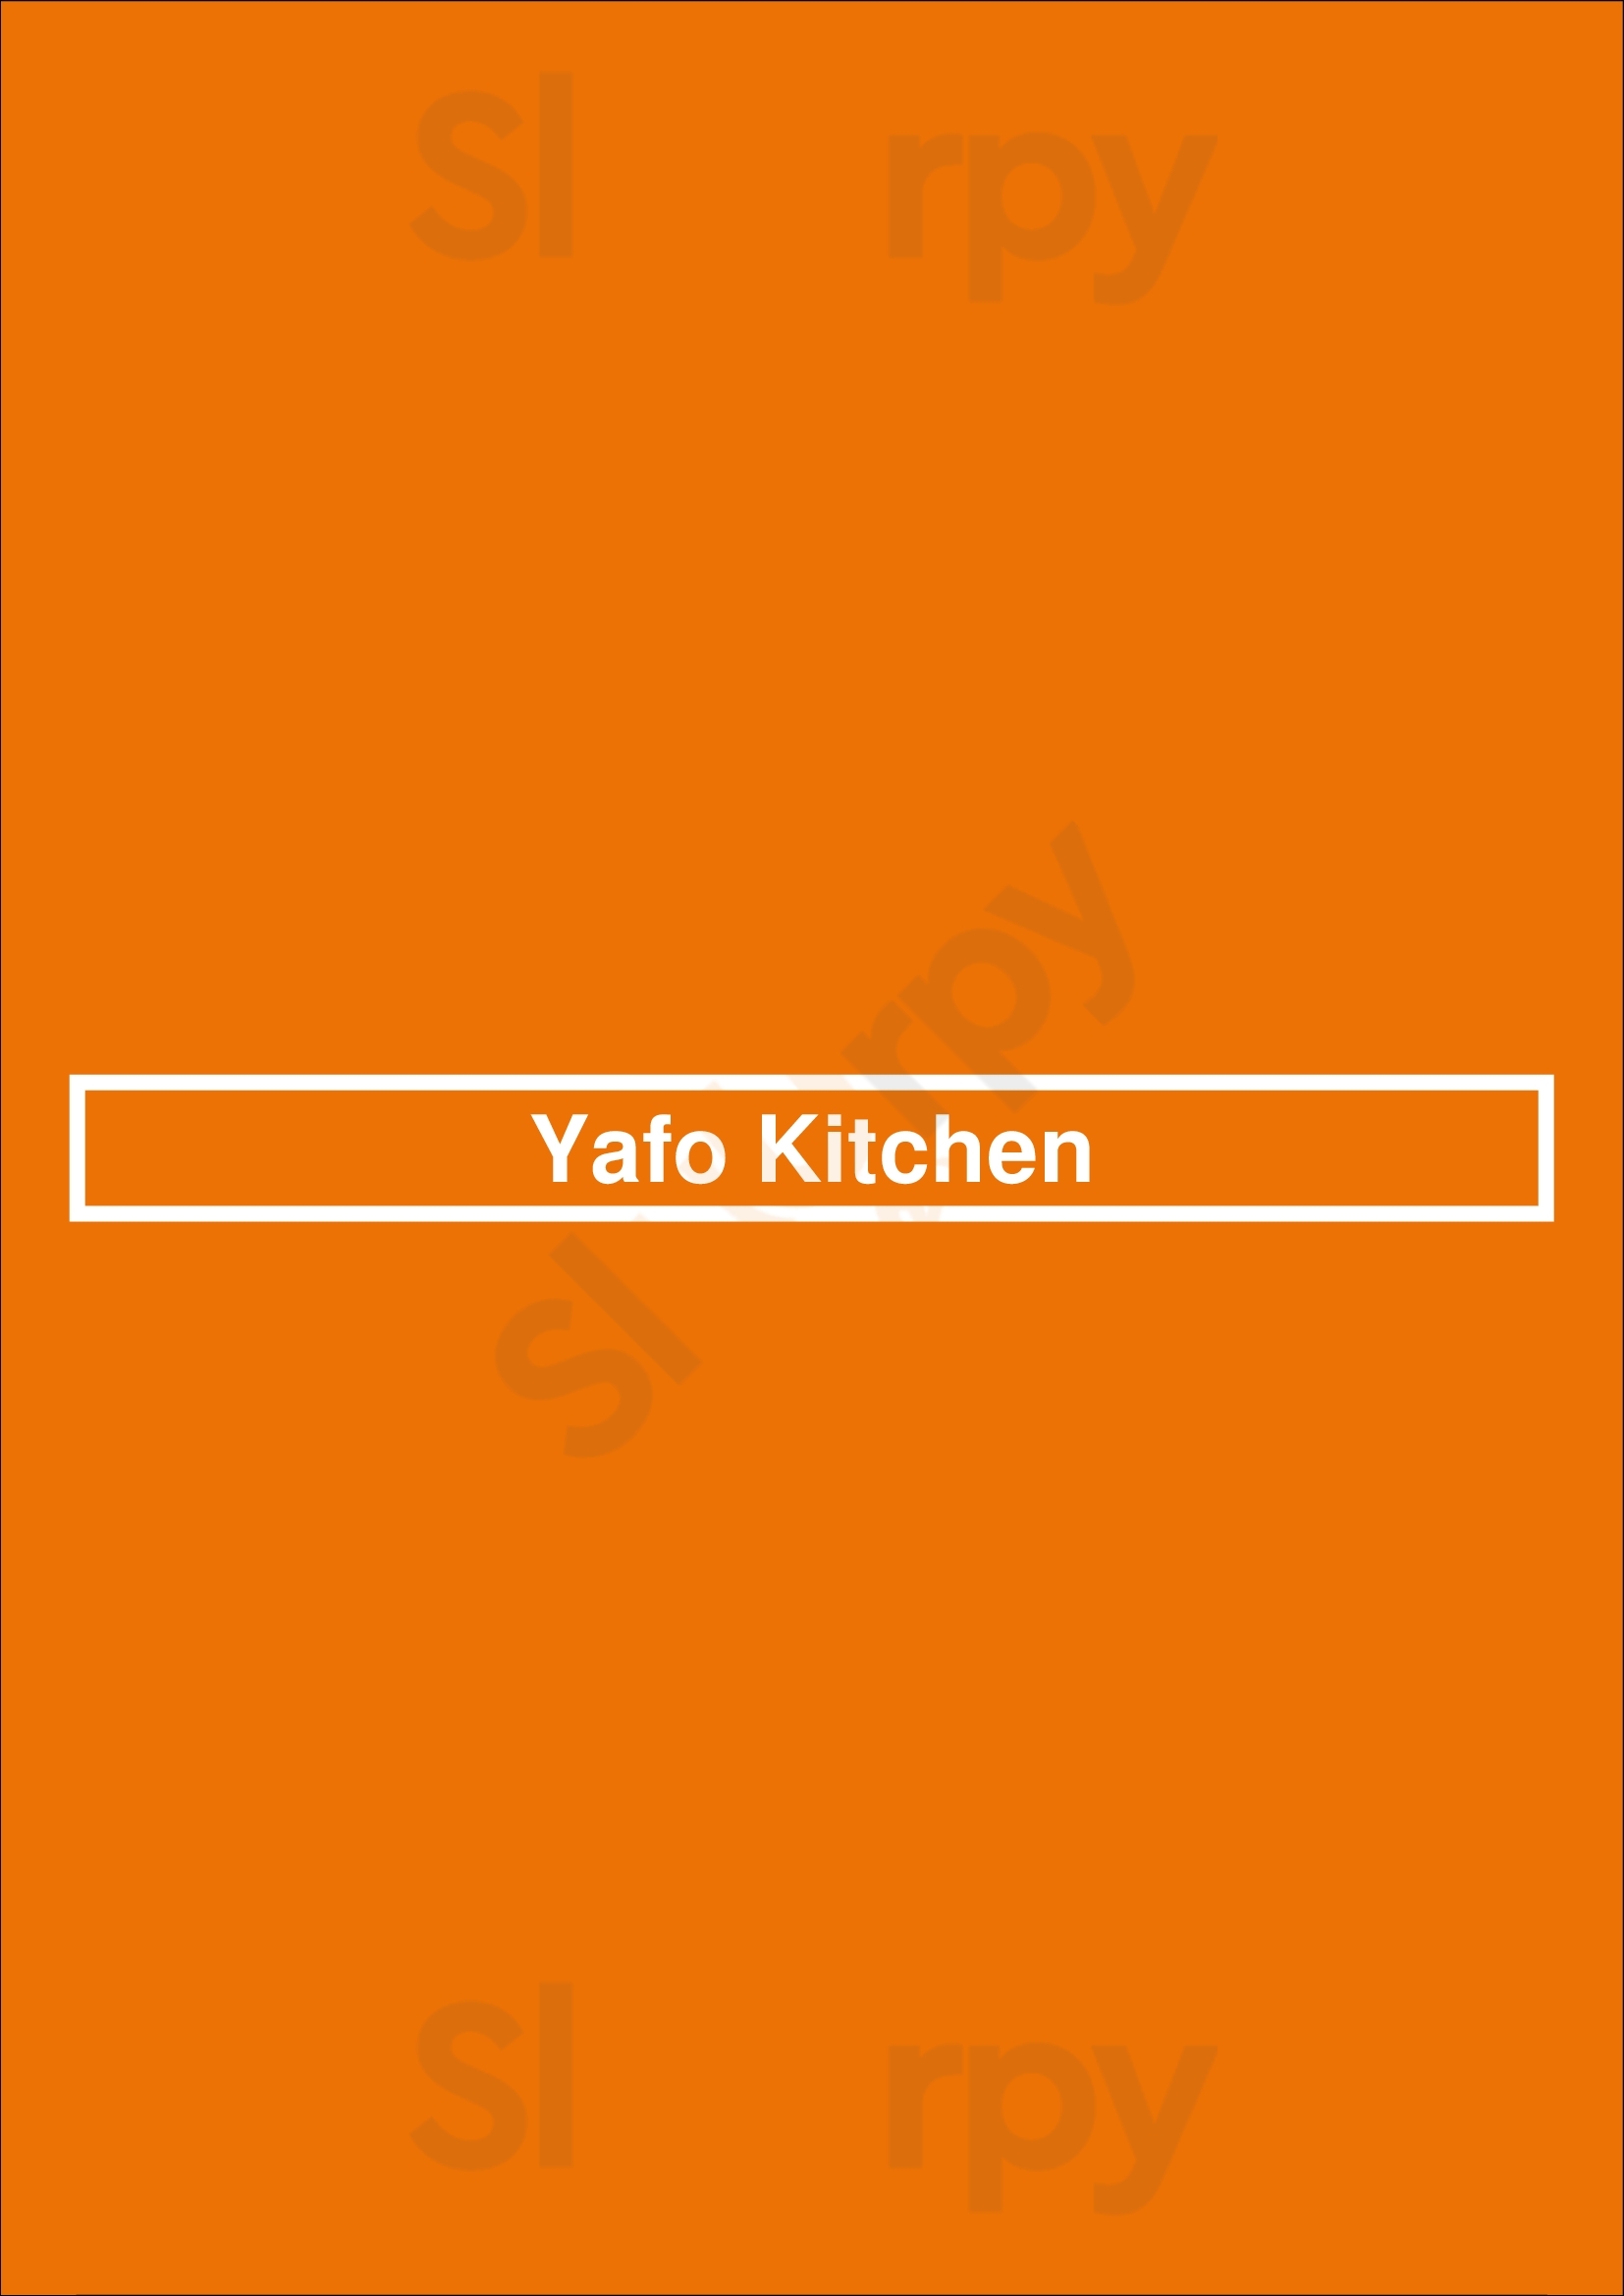 Yafo Kitchen Charlotte Menu - 1